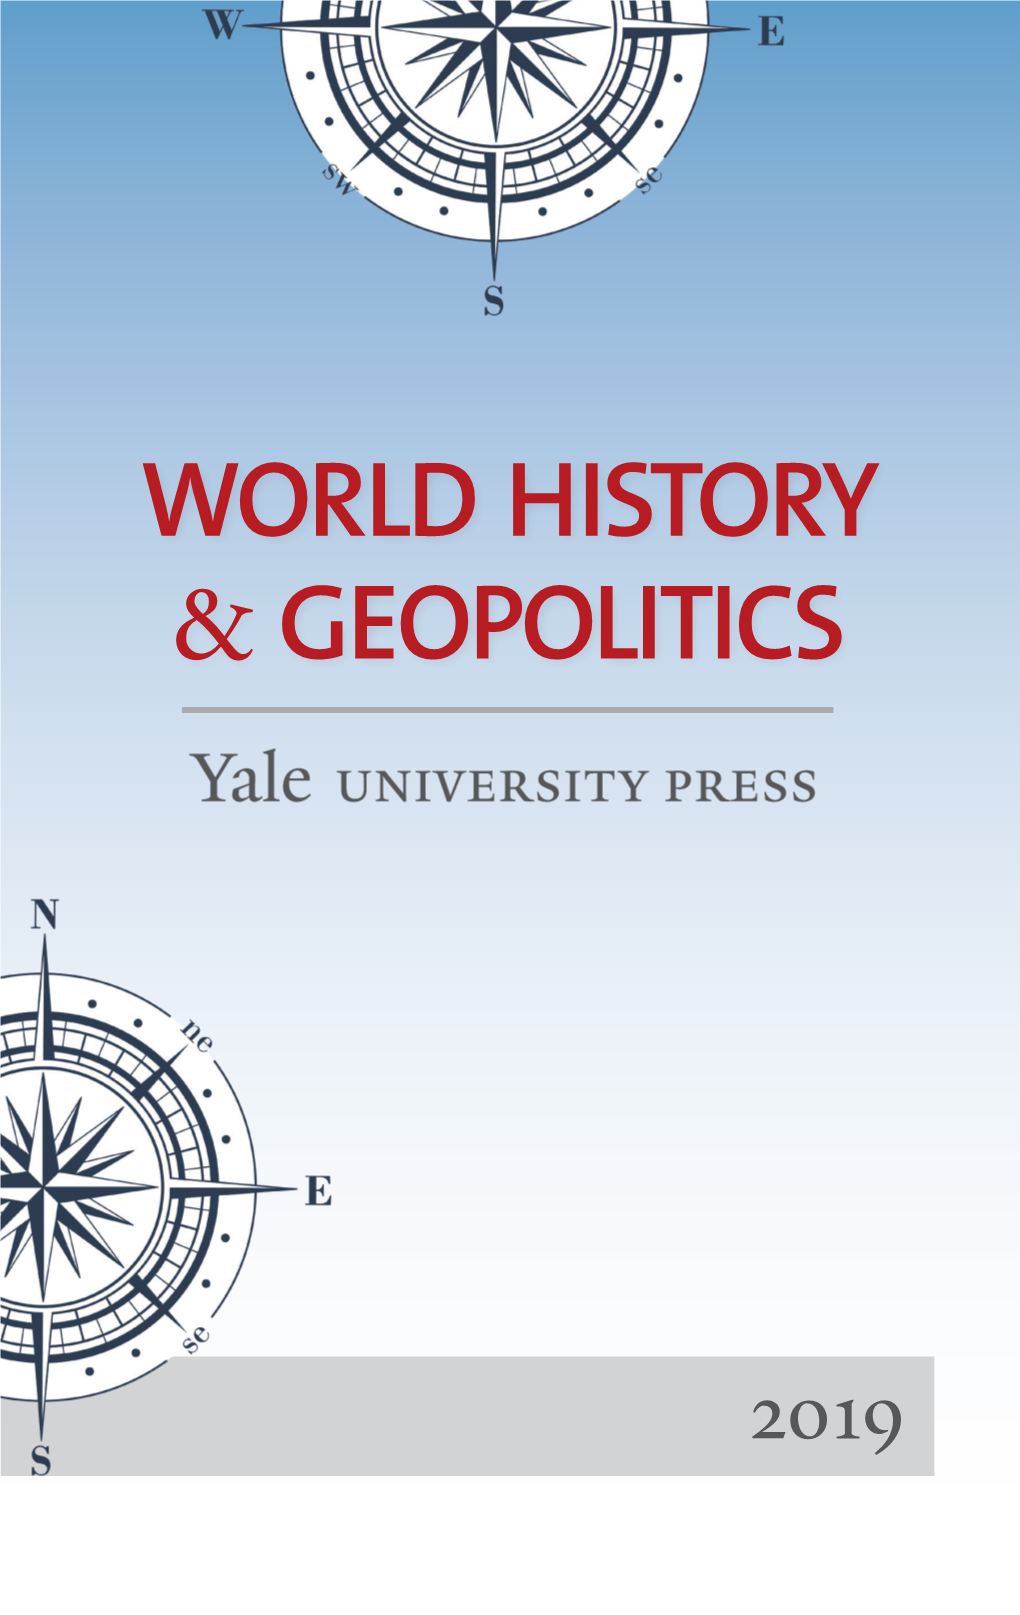 World History & Geopolitics